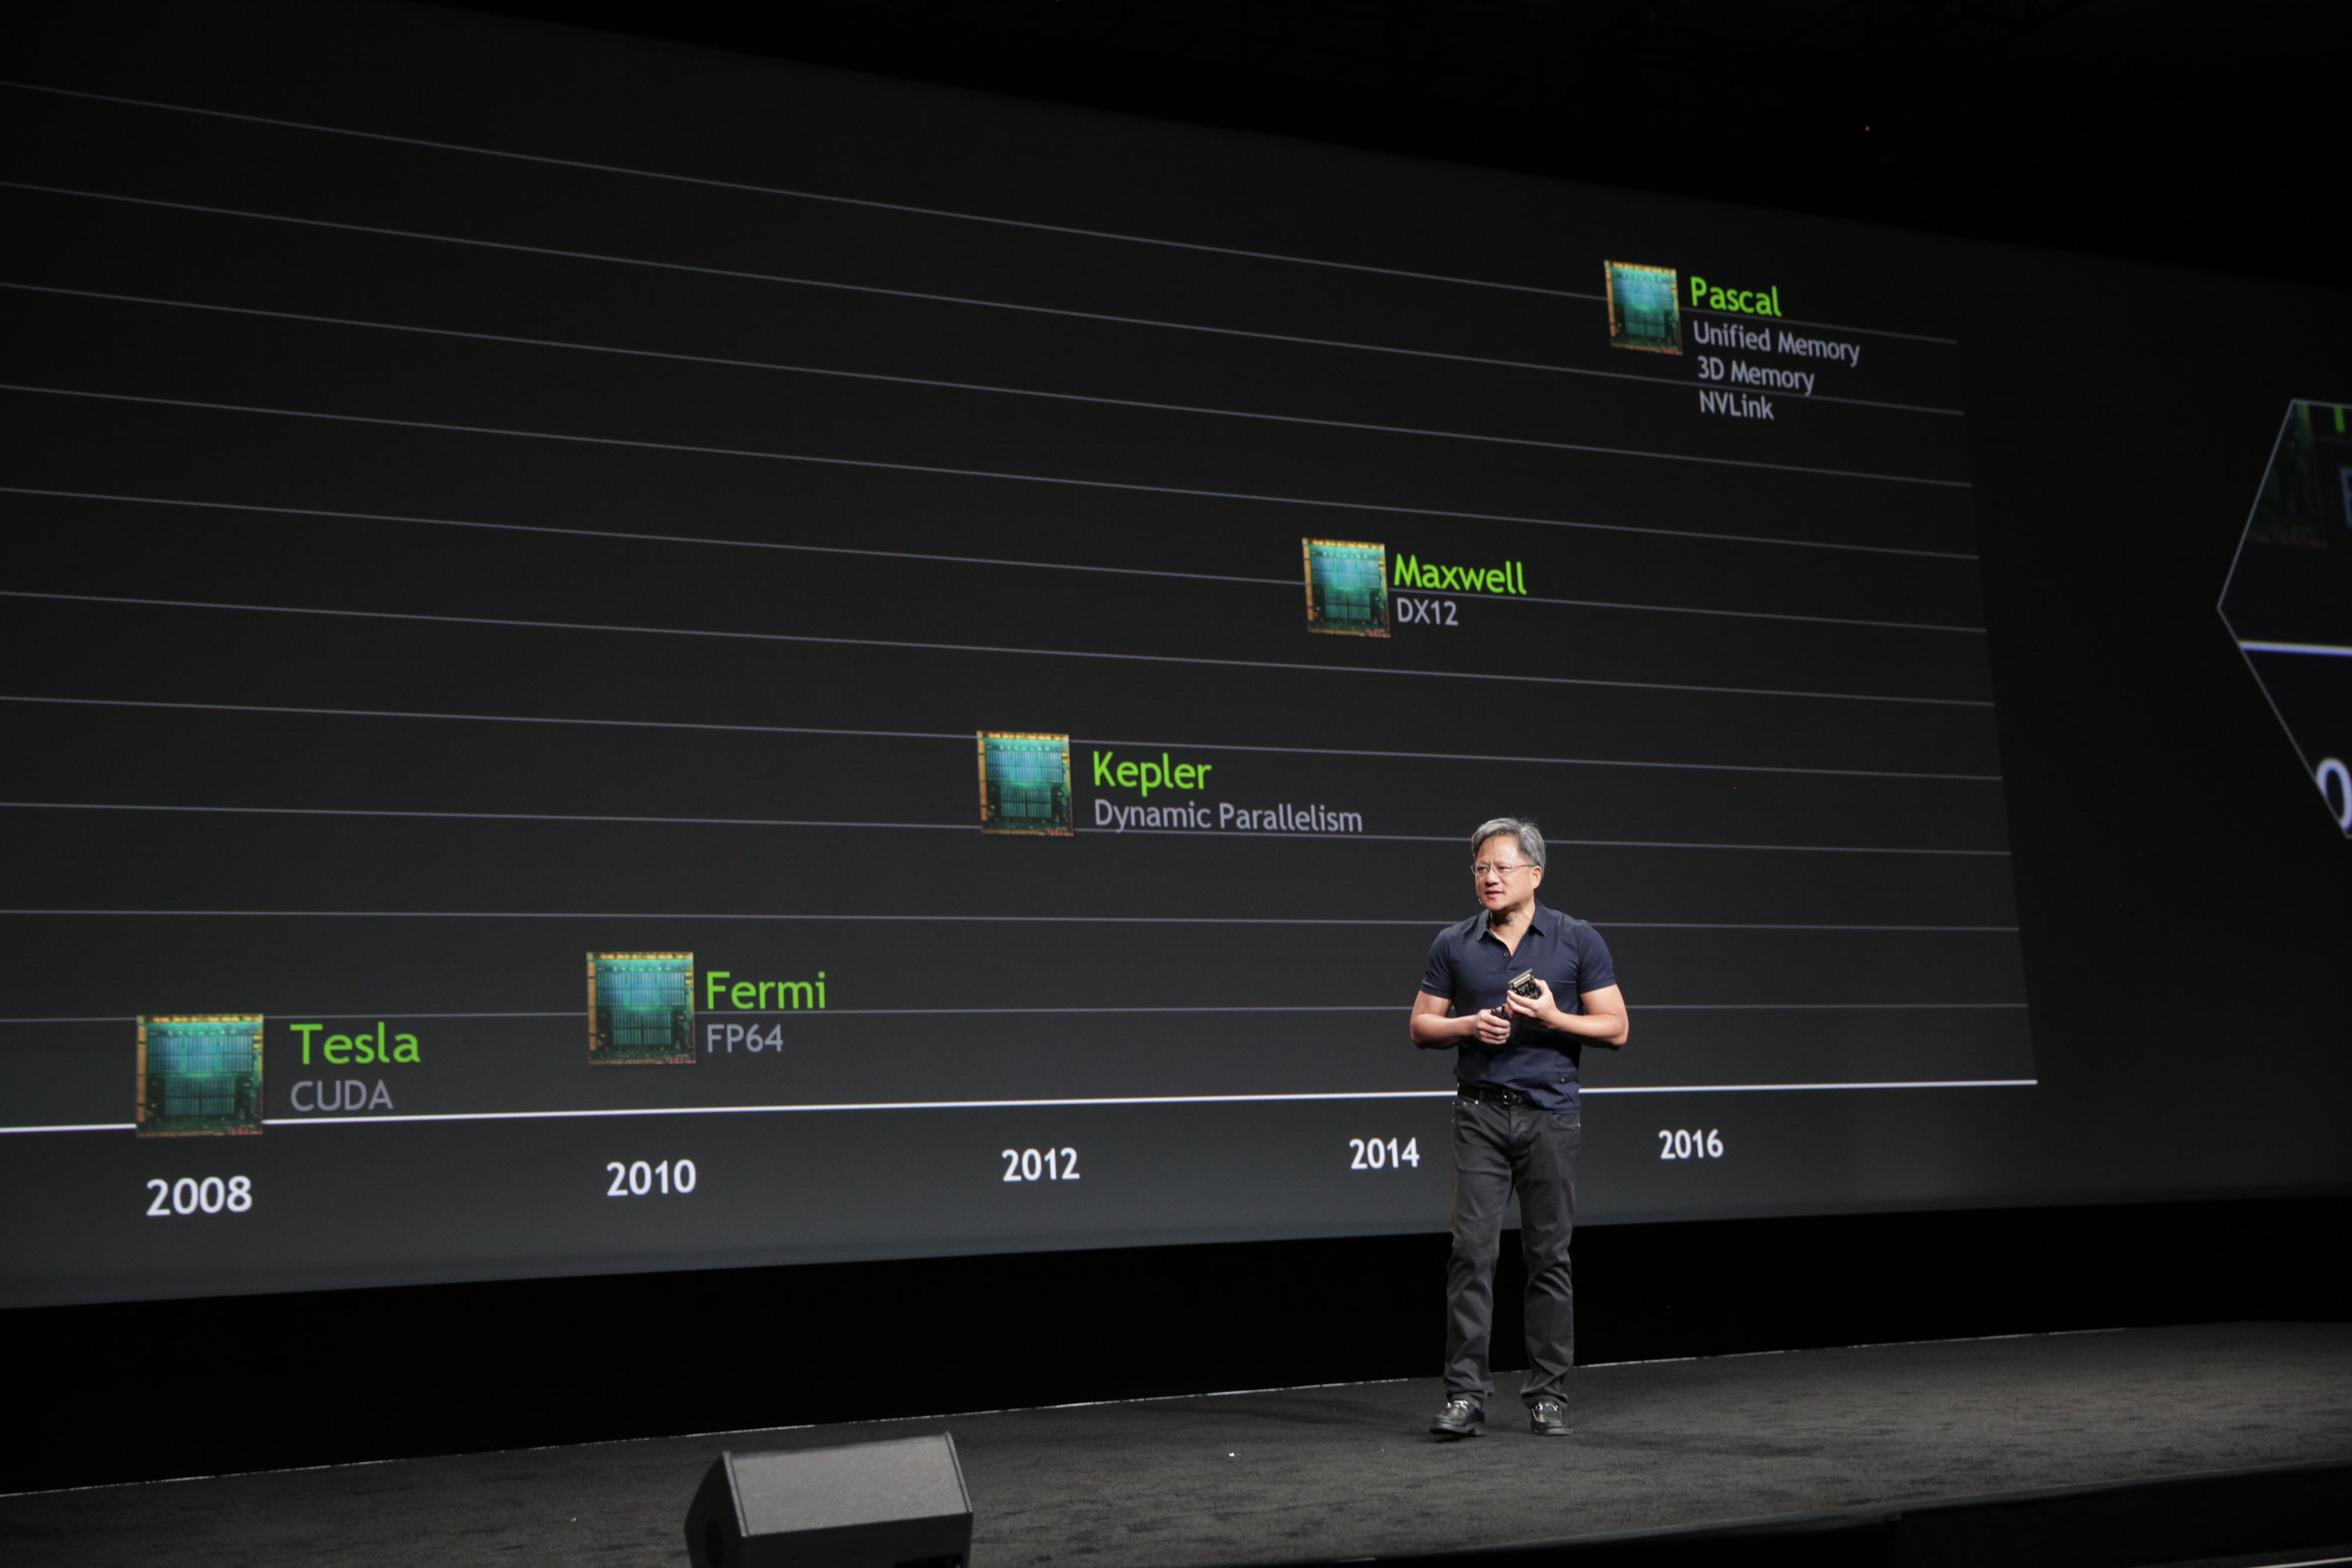 Pascal kommer i 2016.Foto: Nvidia